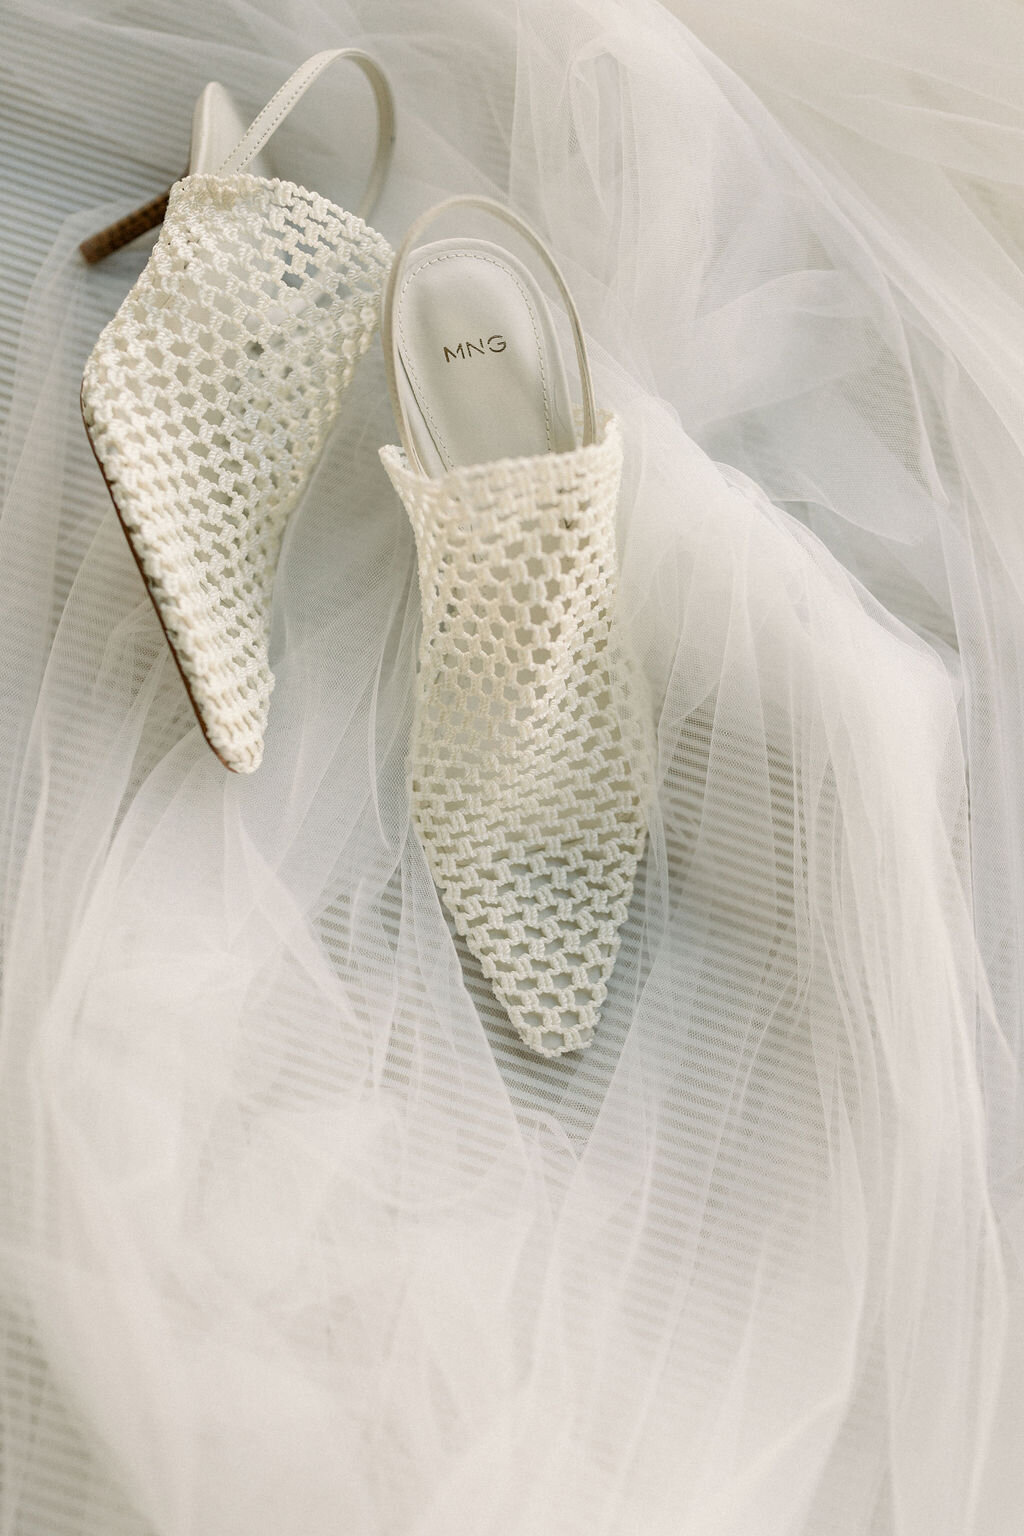 mesh-wedding-shoes